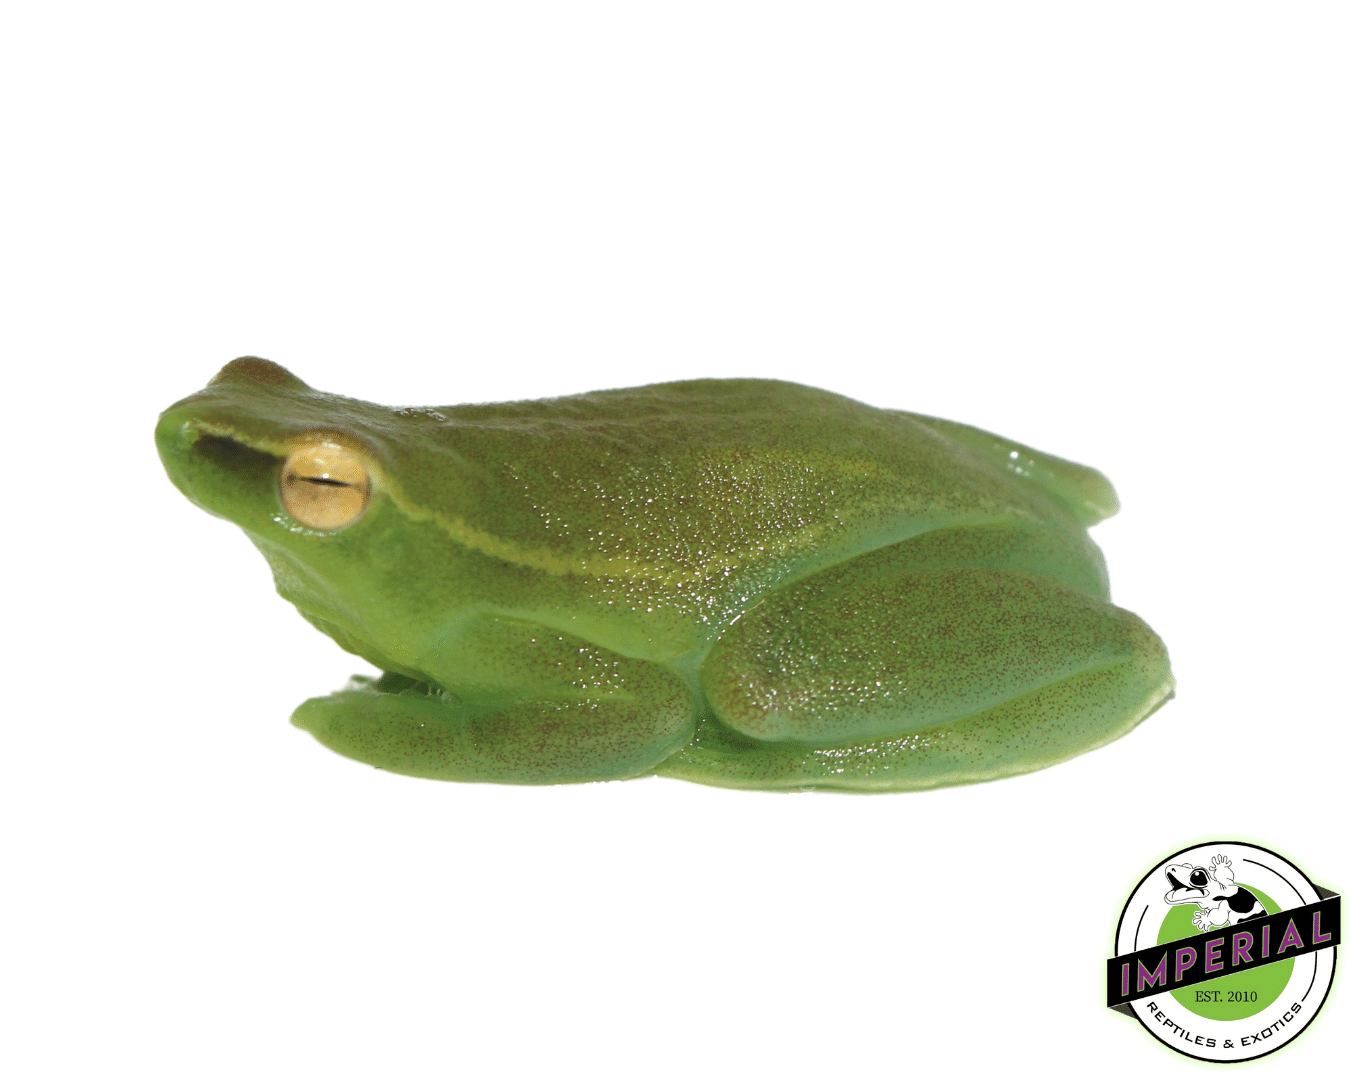 hatchet face tree frog for sale, buy amphibians online